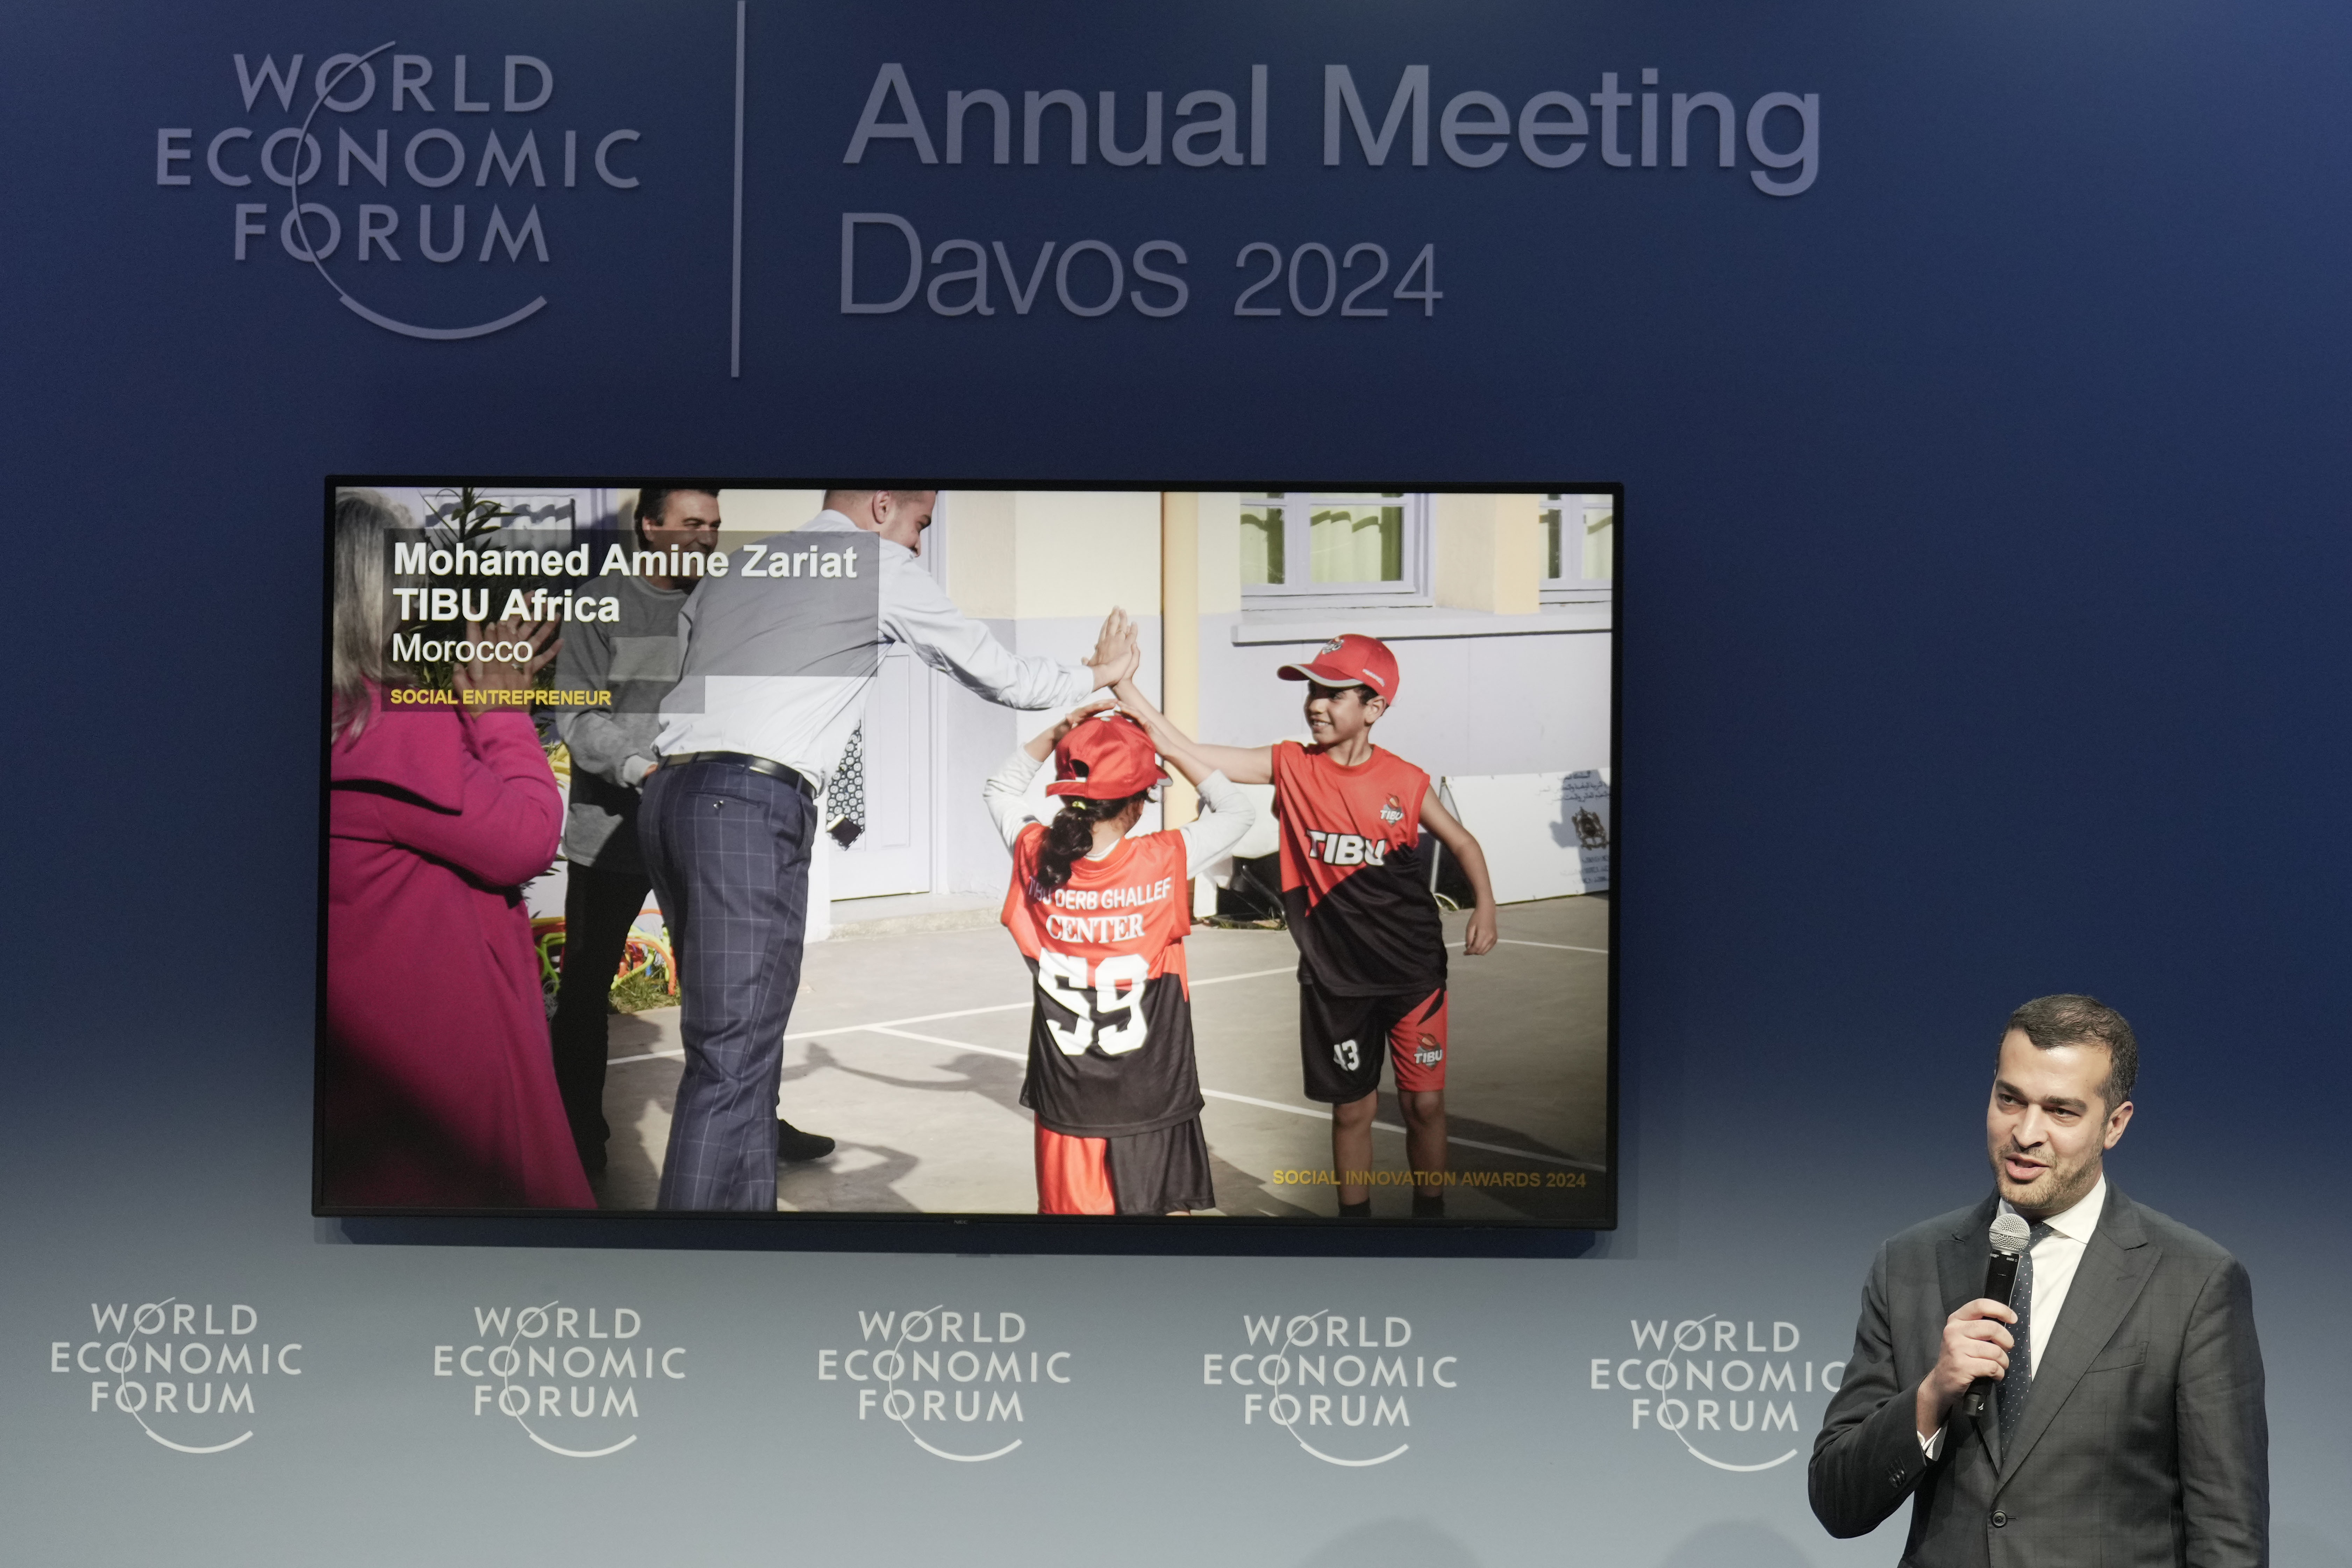 TIBU Africa's President, Amine Zariat at DAVOS, Switzerland